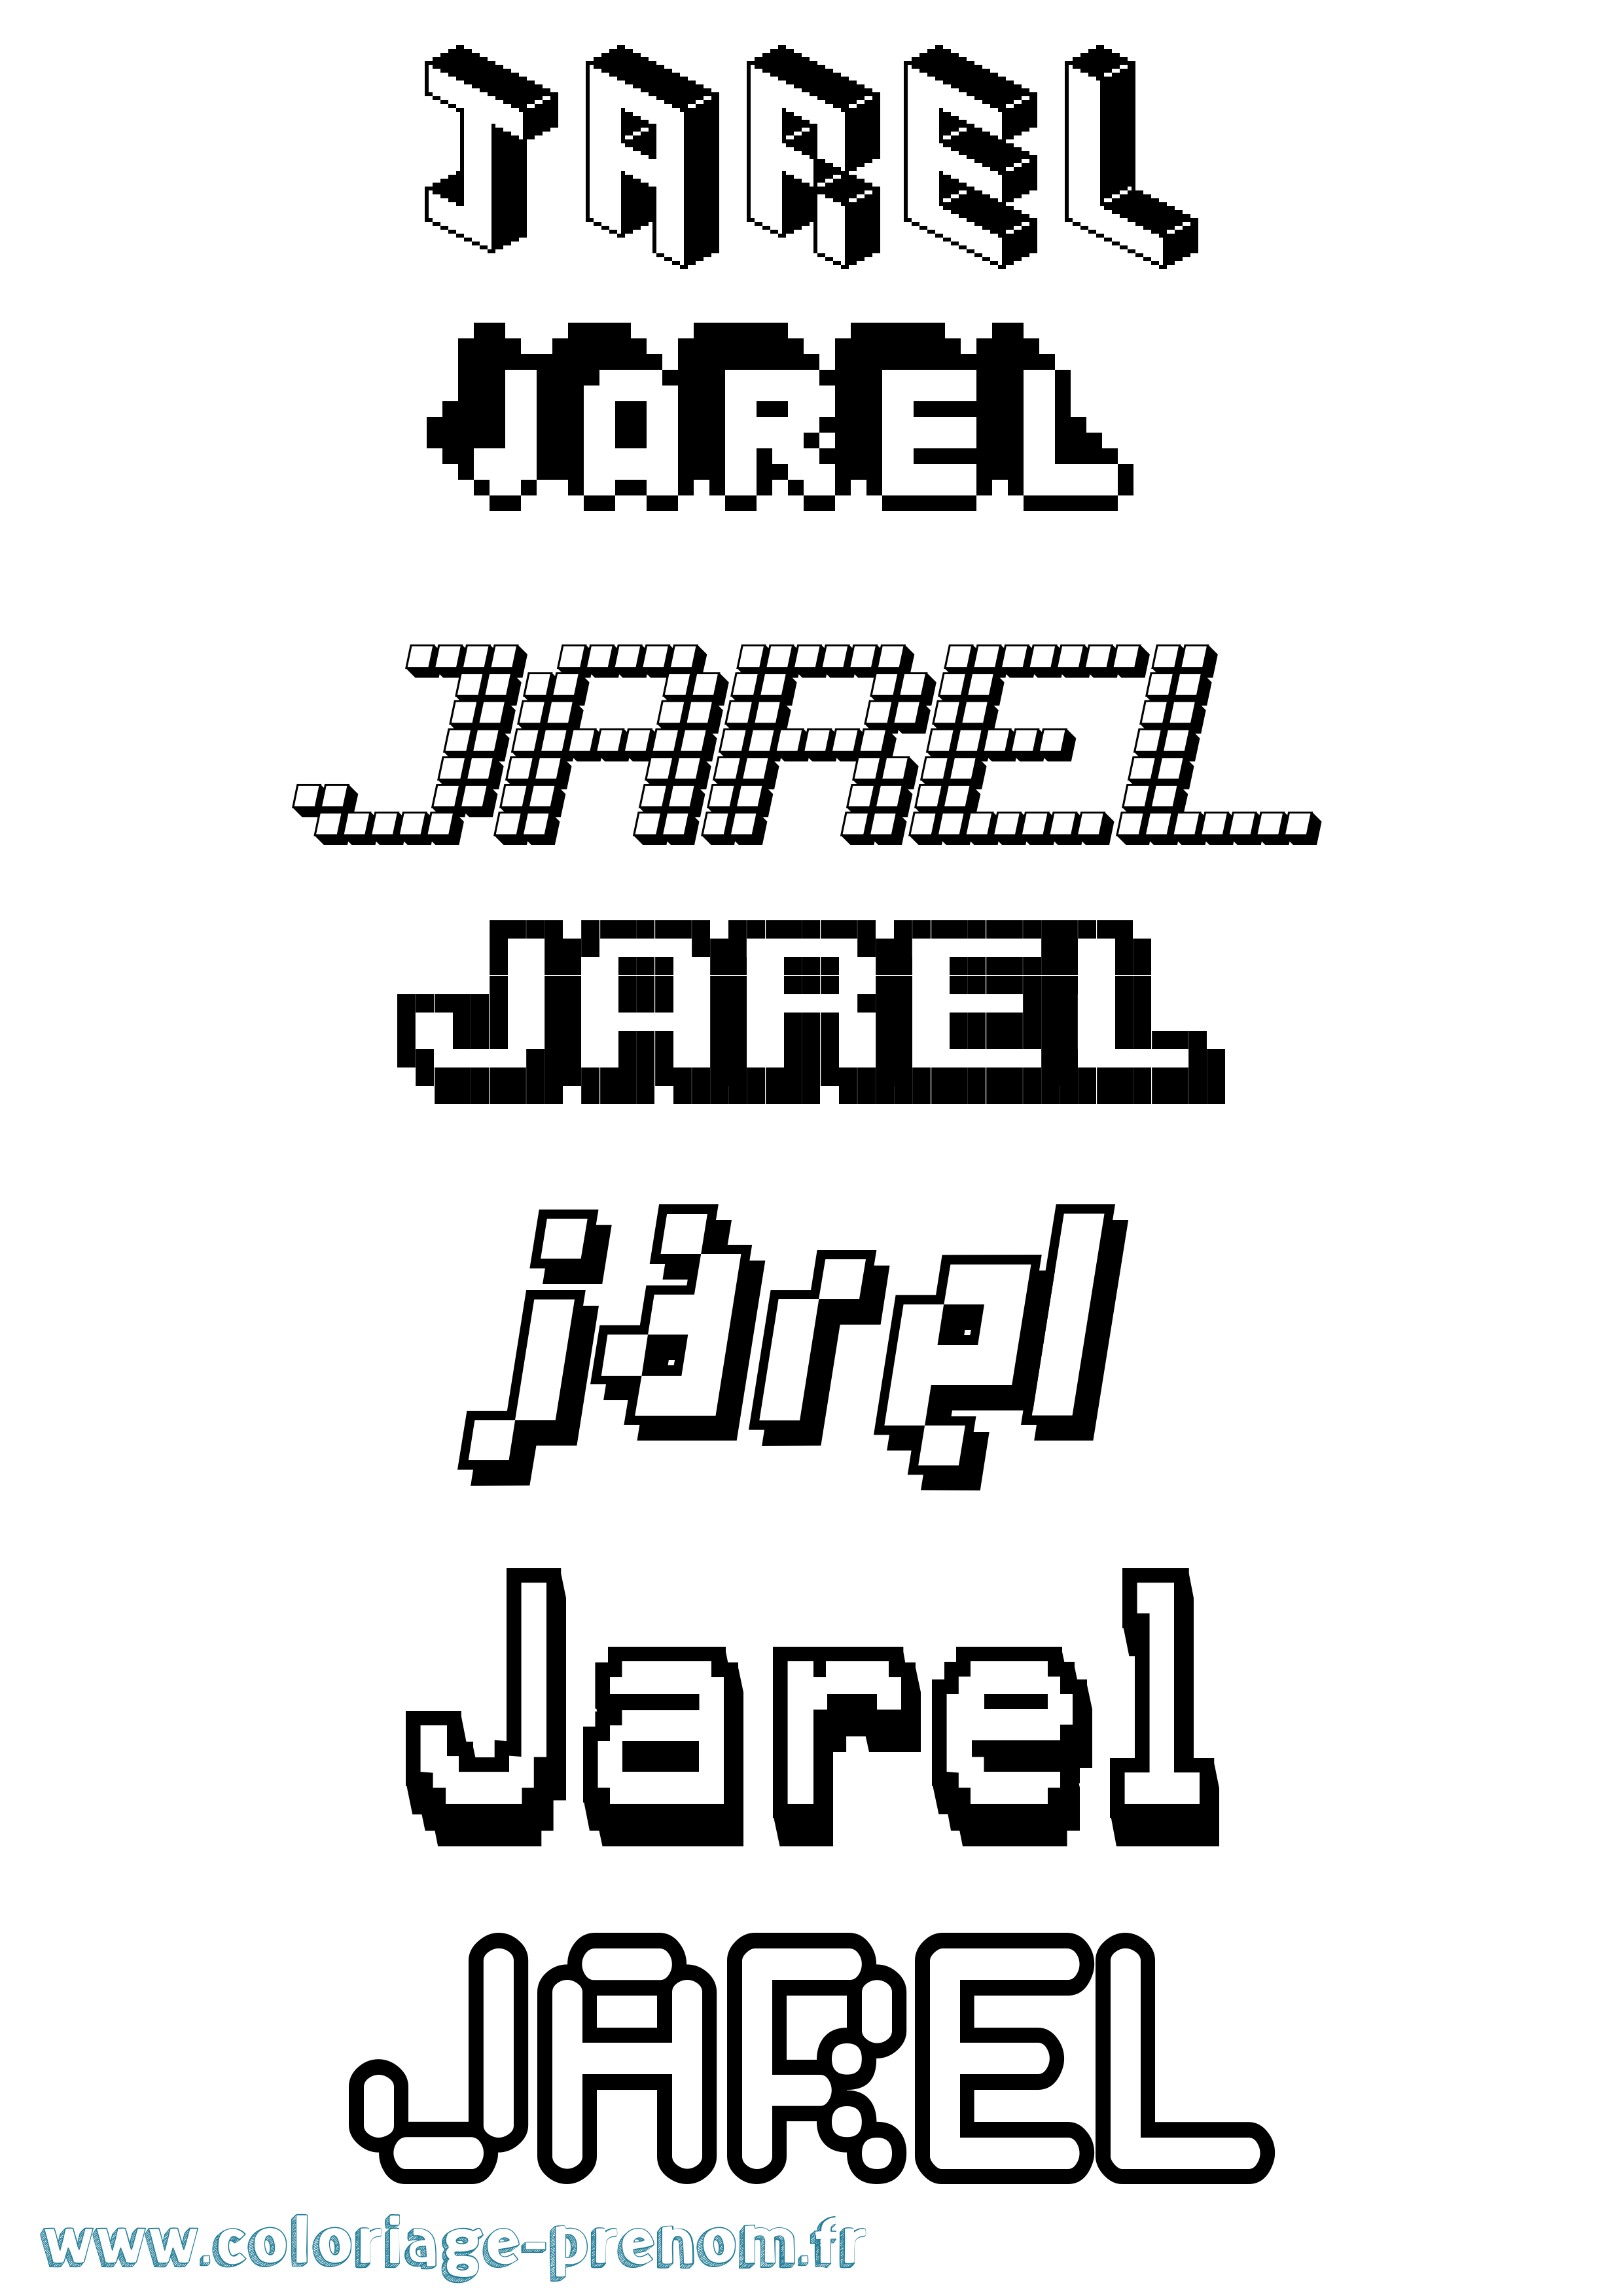 Coloriage prénom Jarel Pixel